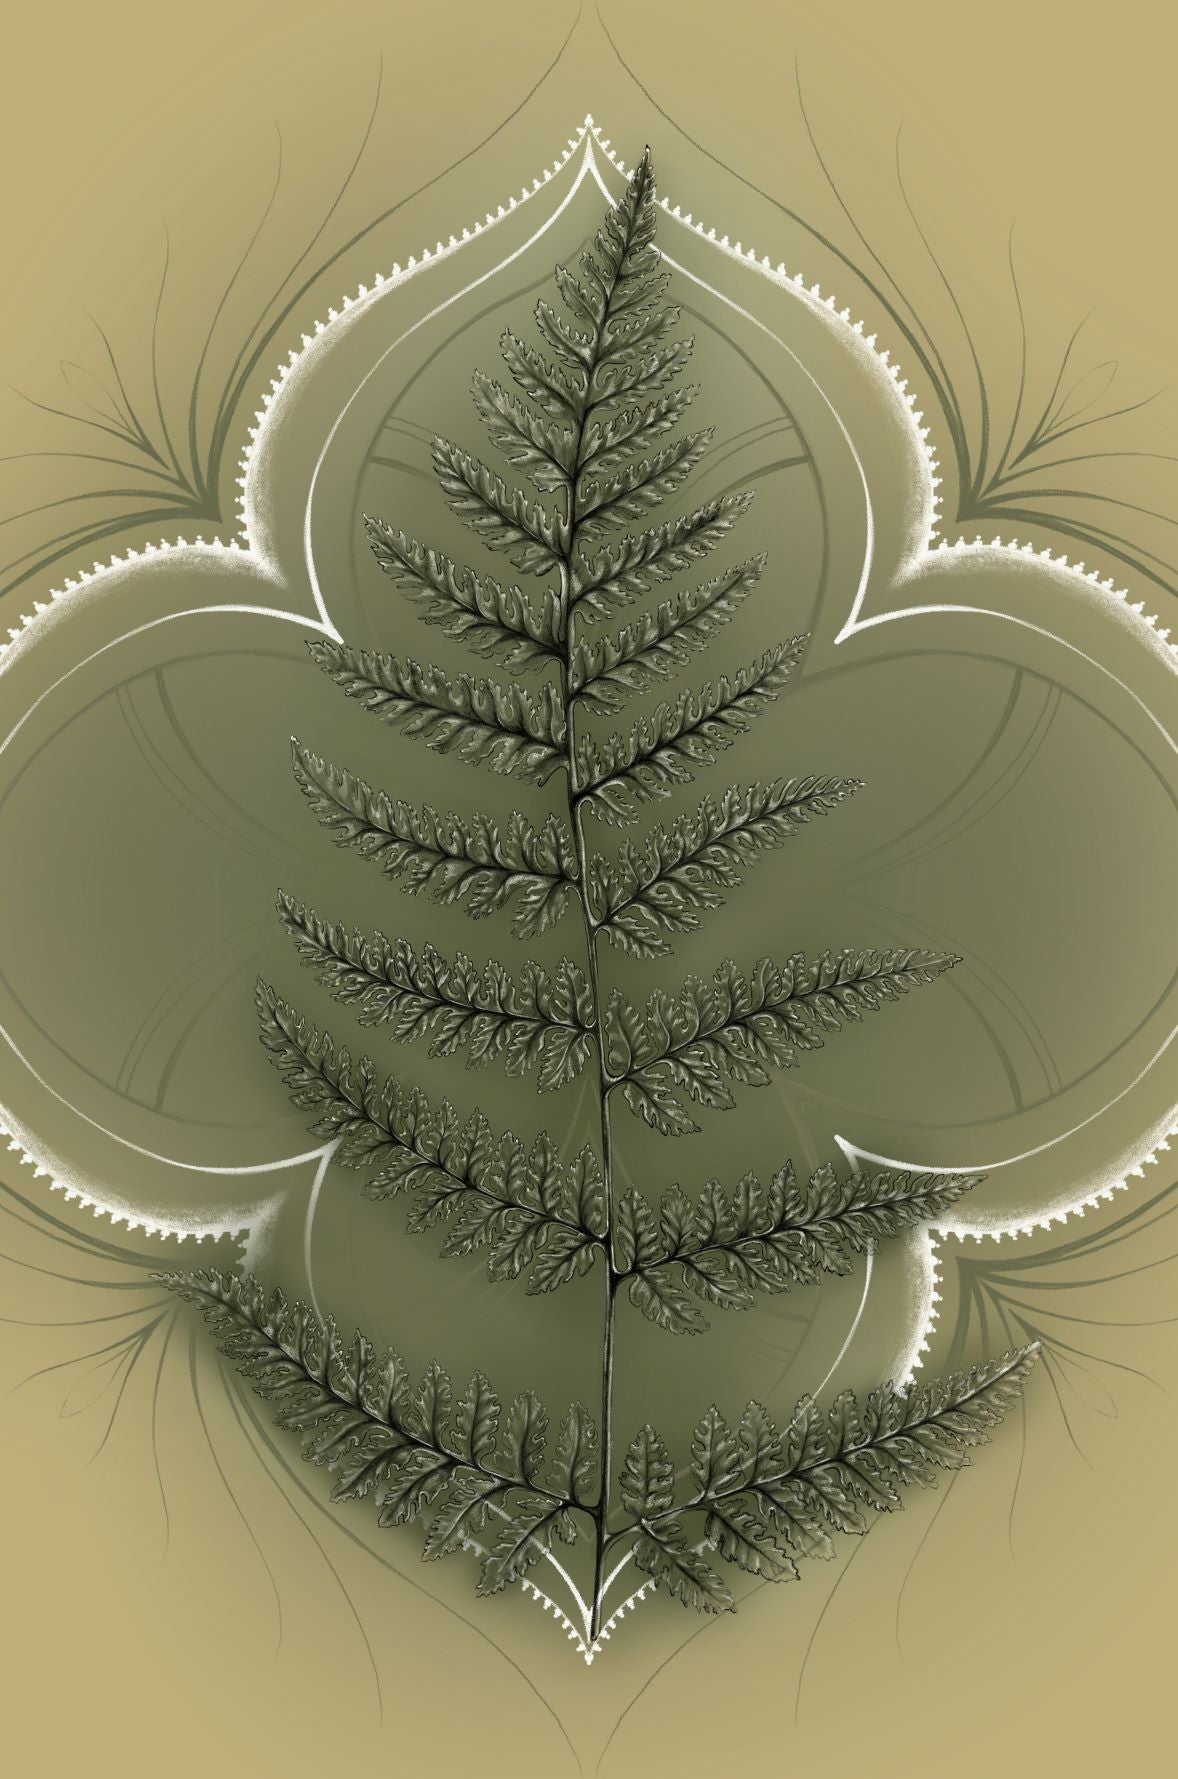 Plantae Digital Art Print